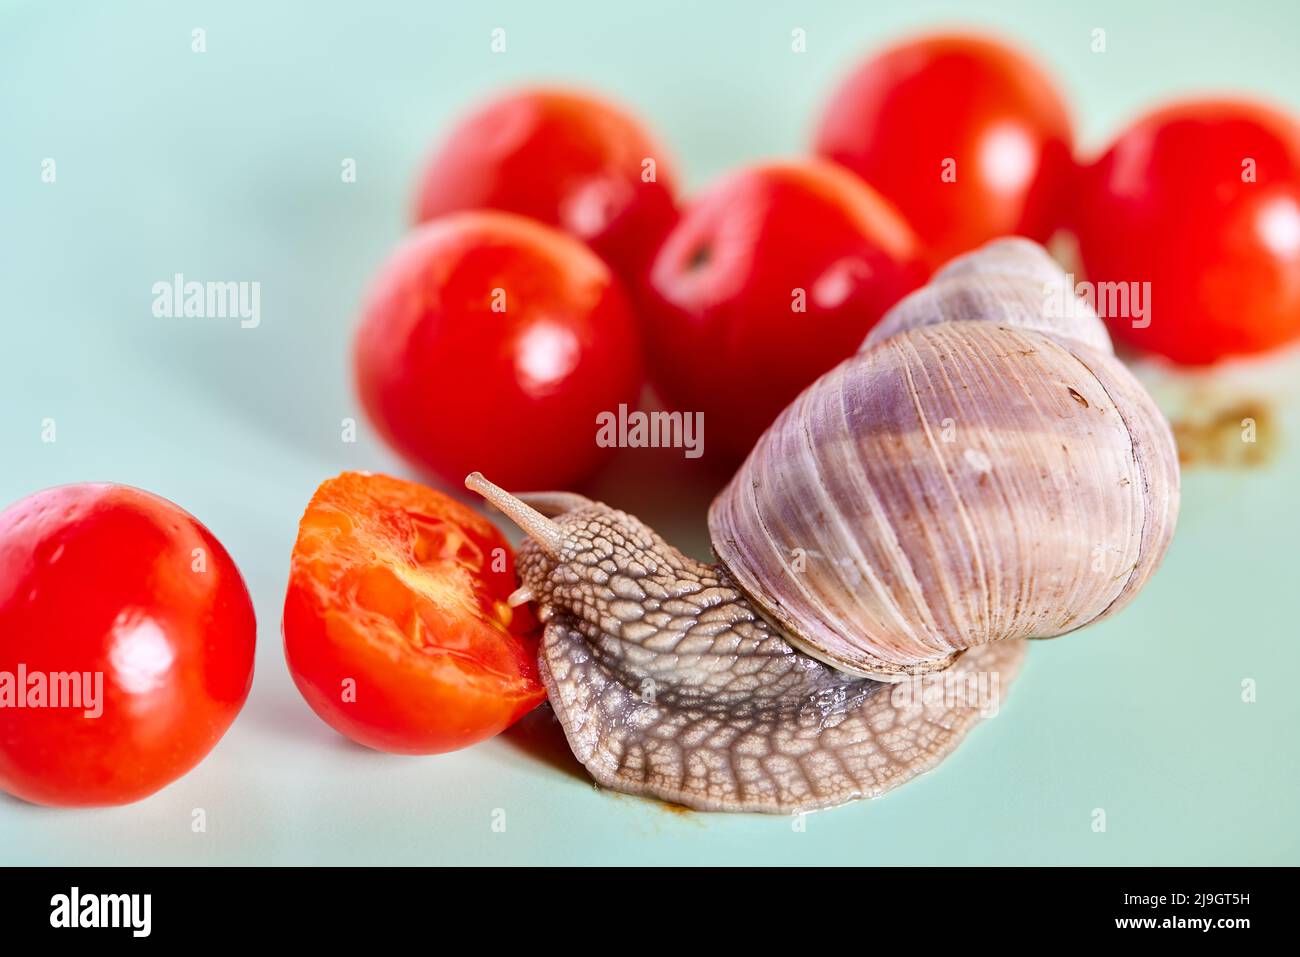 Helix pomatia (Roman snail or Burgundy snail) eating tomatoes Stock Photo